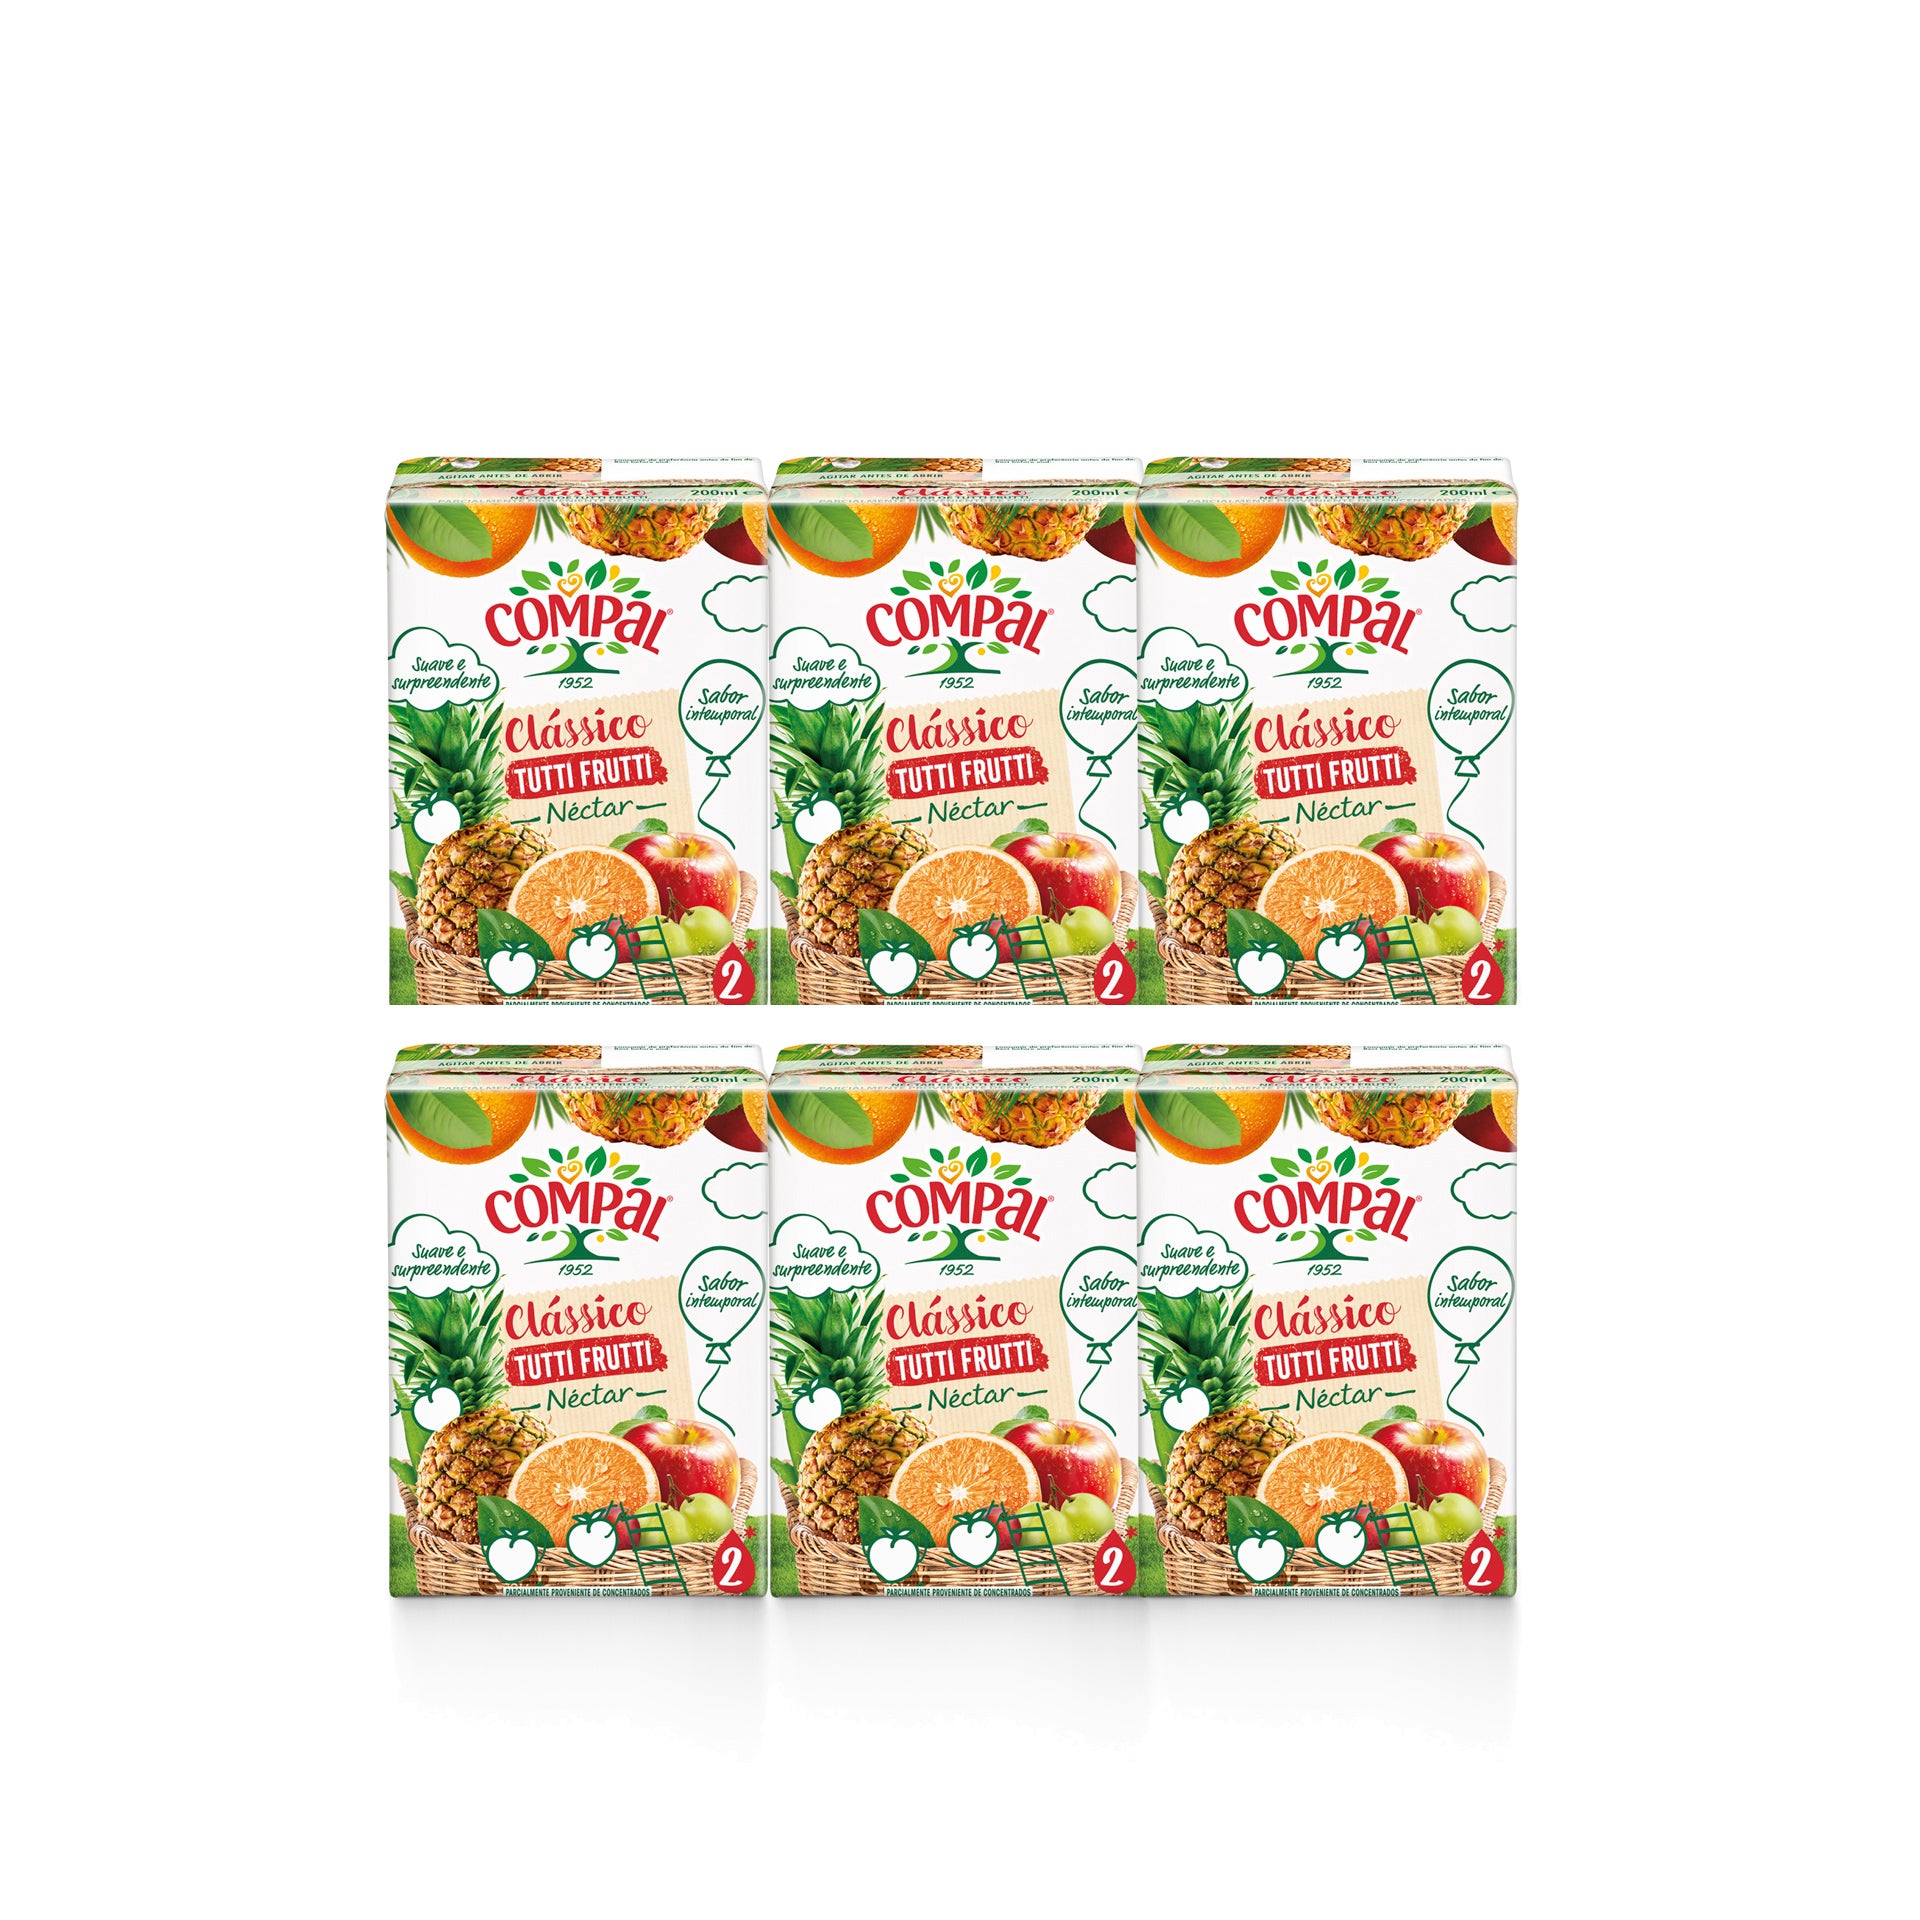 Compal Clássico Néctar Tutti-Frutti 3 x 20 cl - Pack 2 x 60 cl